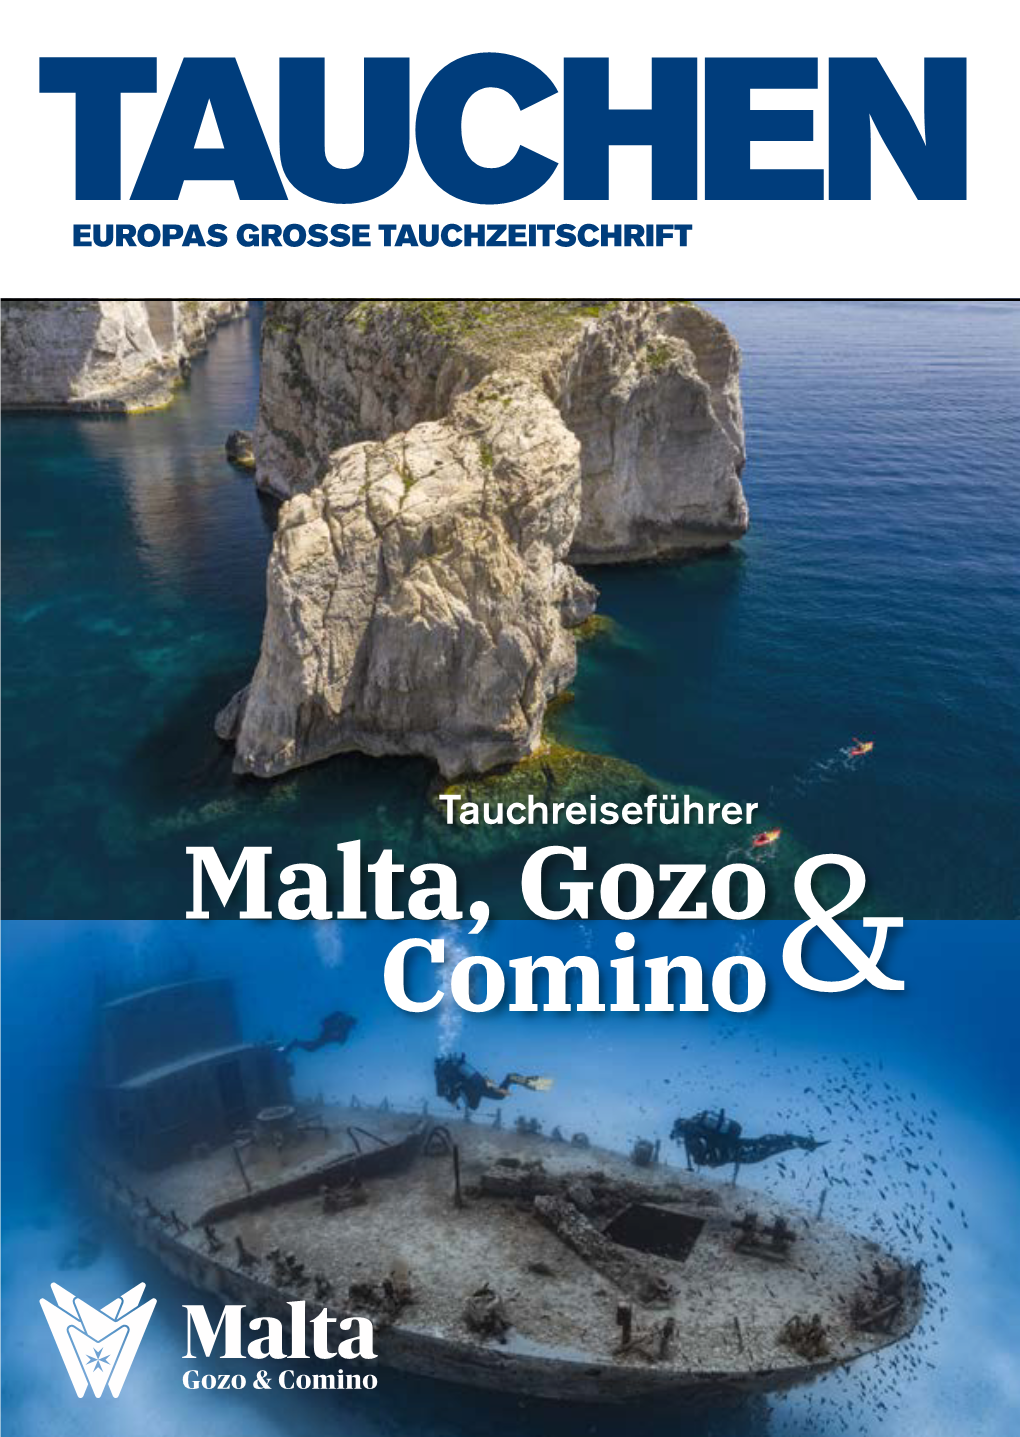 Malta, Gozo Comino& MALTA ° INHALT · EDITORIAL